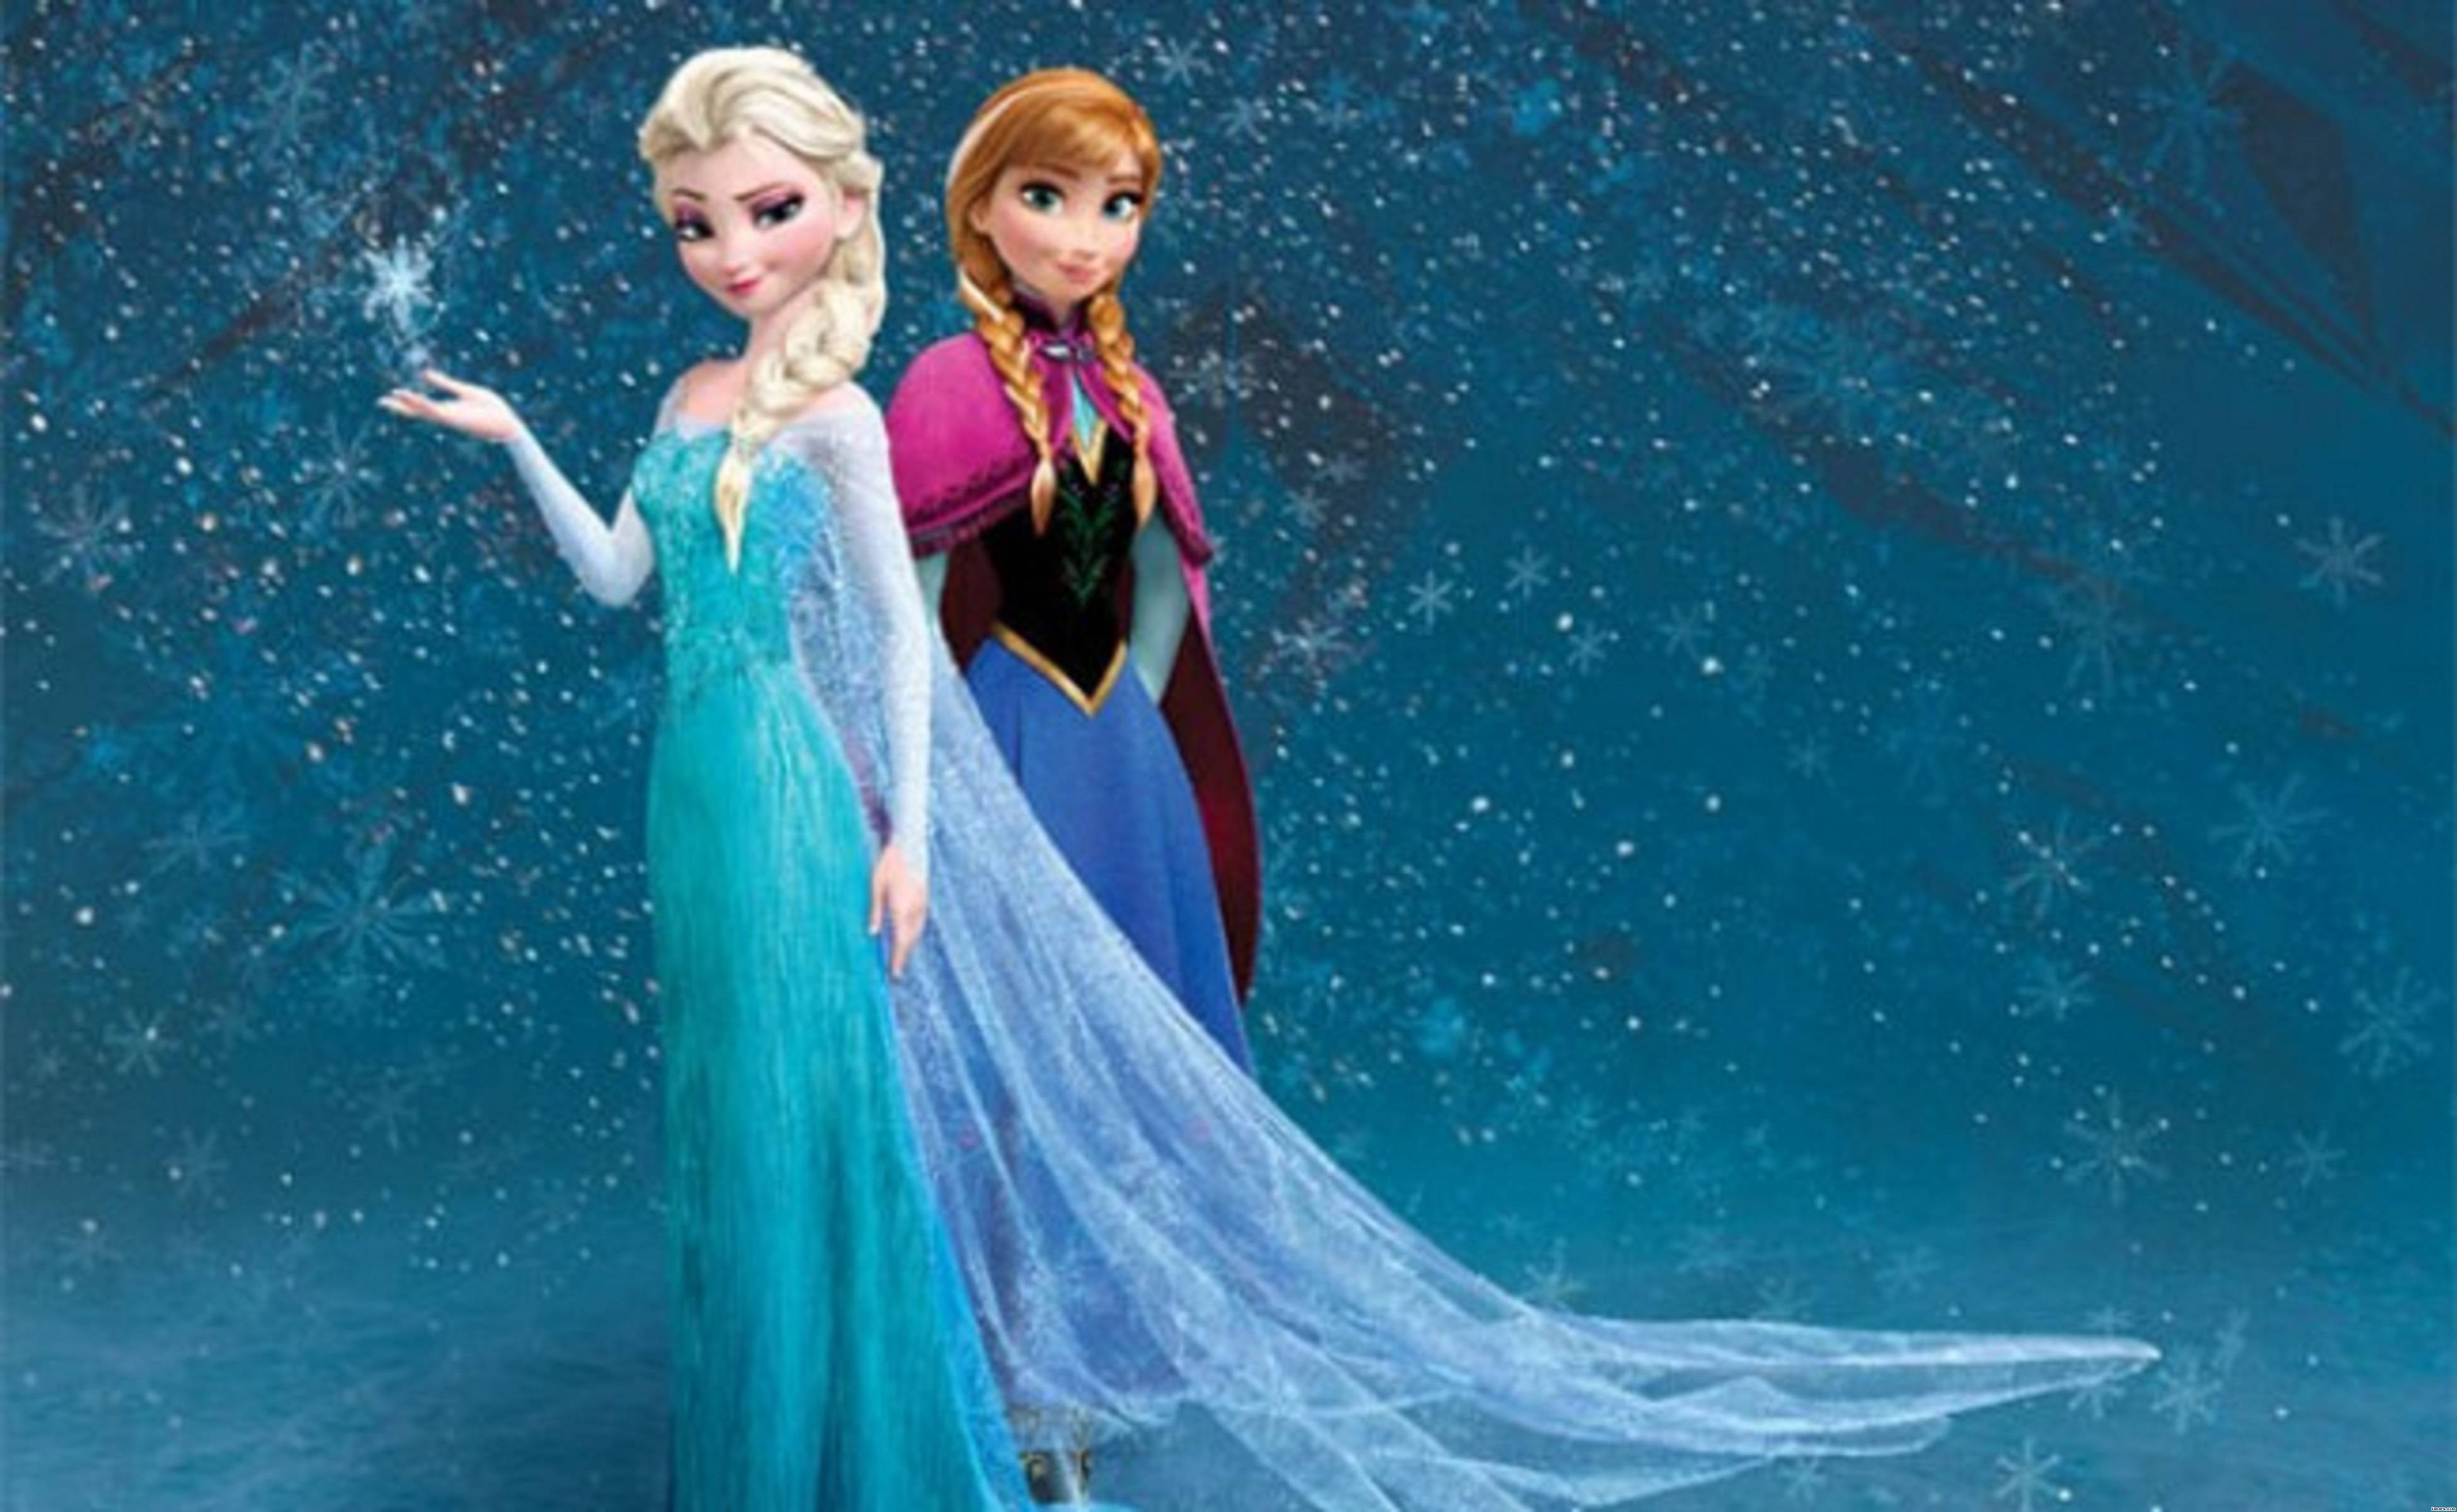 Frozen Elsa Wallpapers Top Free Frozen Elsa Backgrounds Wallpaperaccess